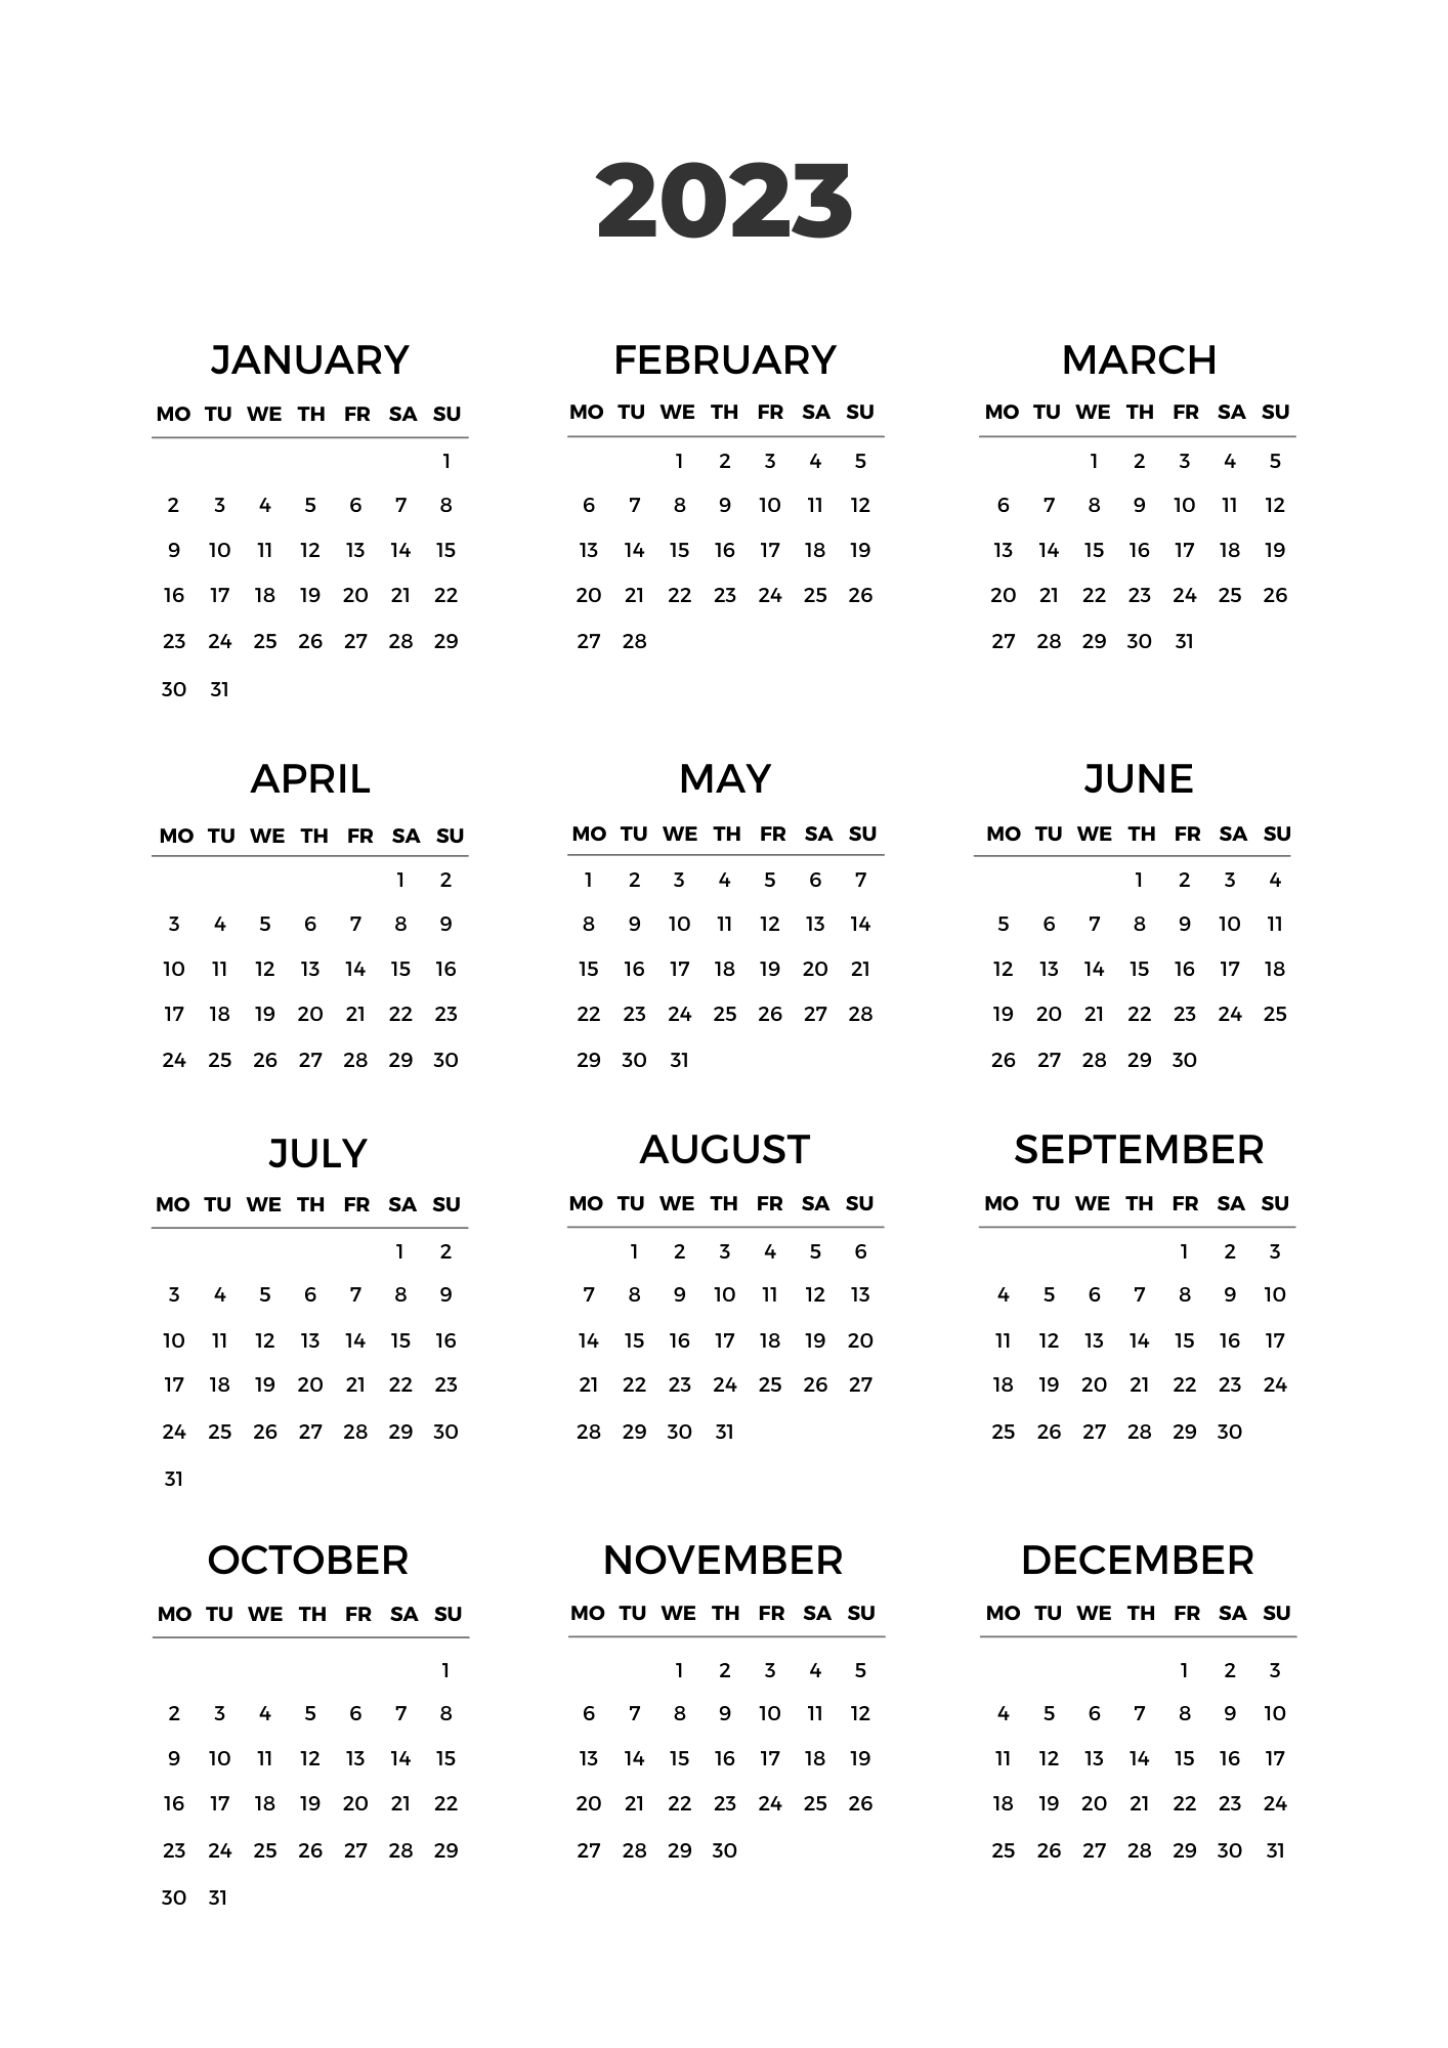 Get Organized with a Free 2023 Calendar Printable PDF